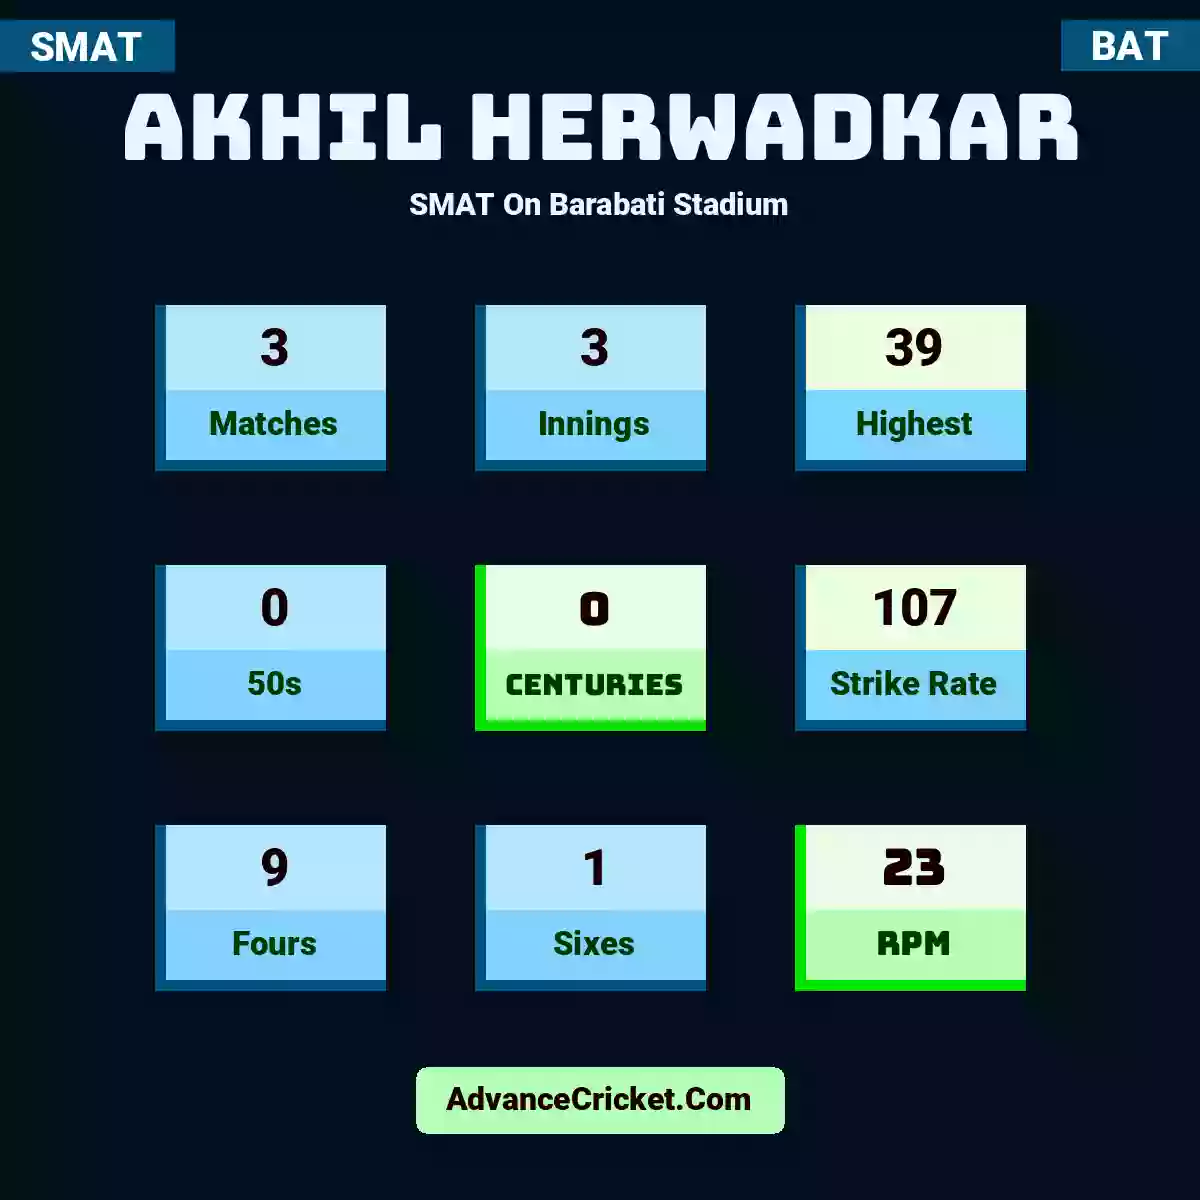 Akhil Herwadkar SMAT  On Barabati Stadium, Akhil Herwadkar played 3 matches, scored 39 runs as highest, 0 half-centuries, and 0 centuries, with a strike rate of 107. A.Herwadkar hit 9 fours and 1 sixes, with an RPM of 23.